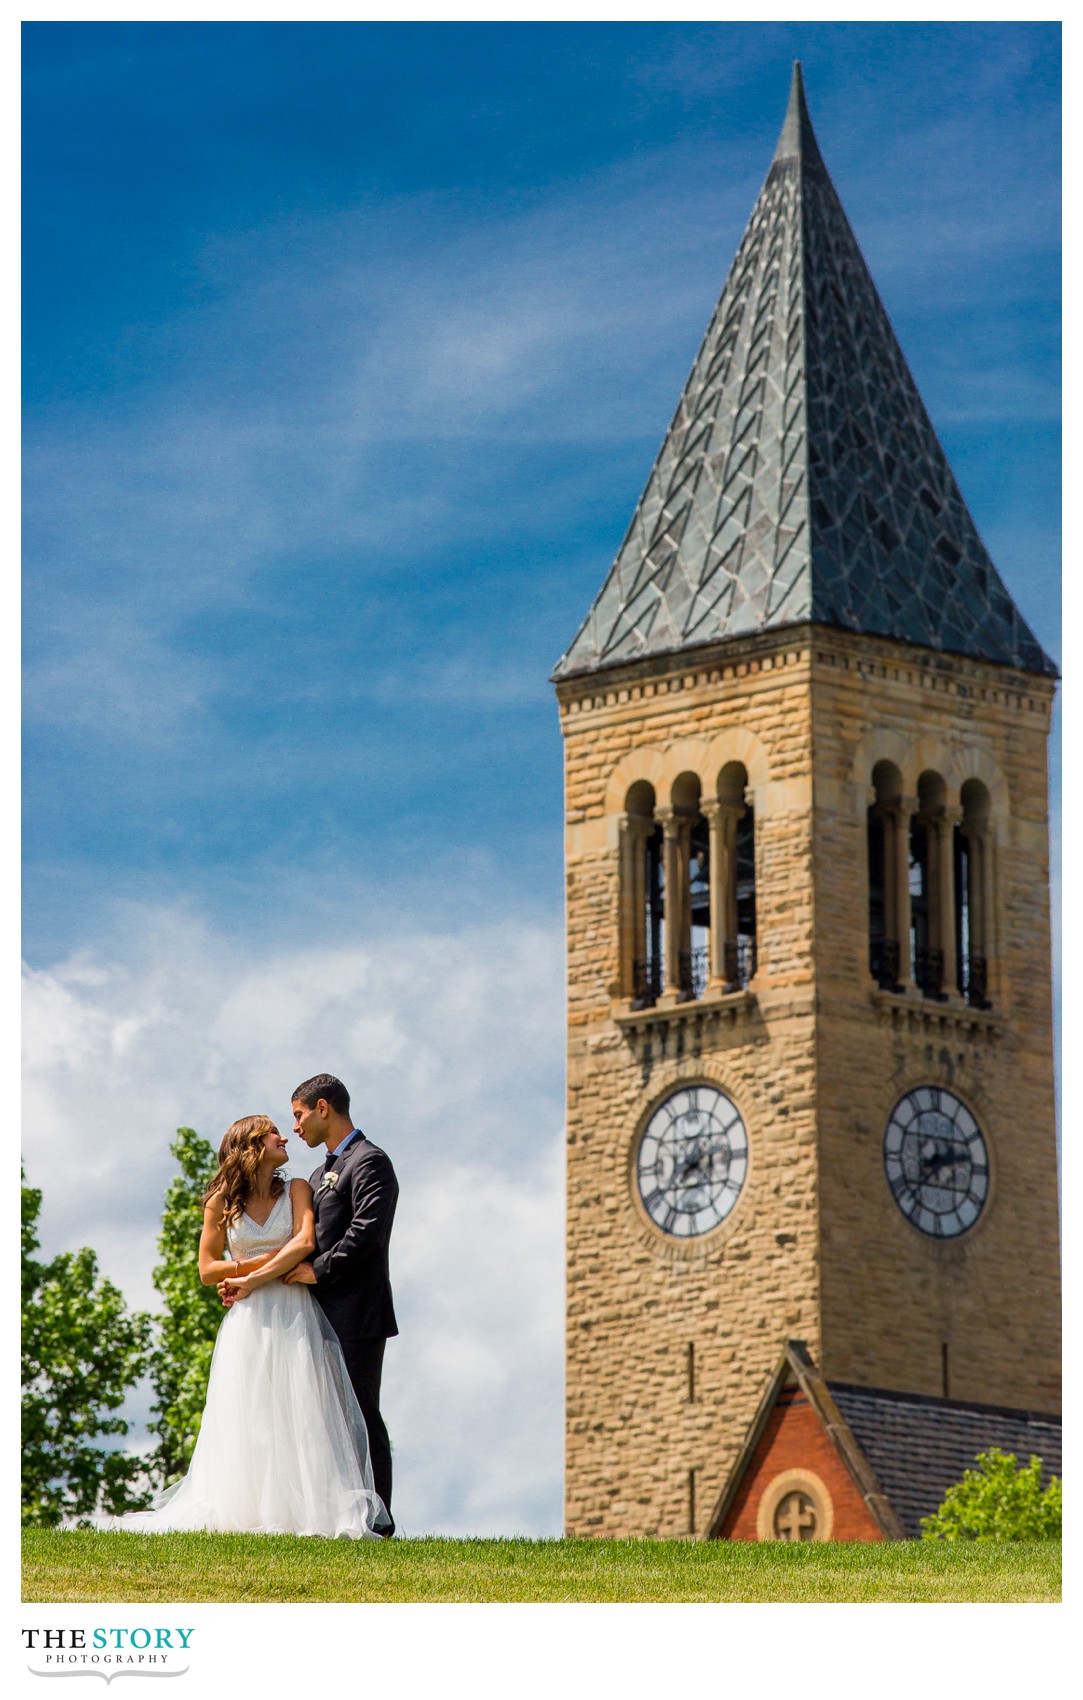 cornell university wedding photo with clock tower